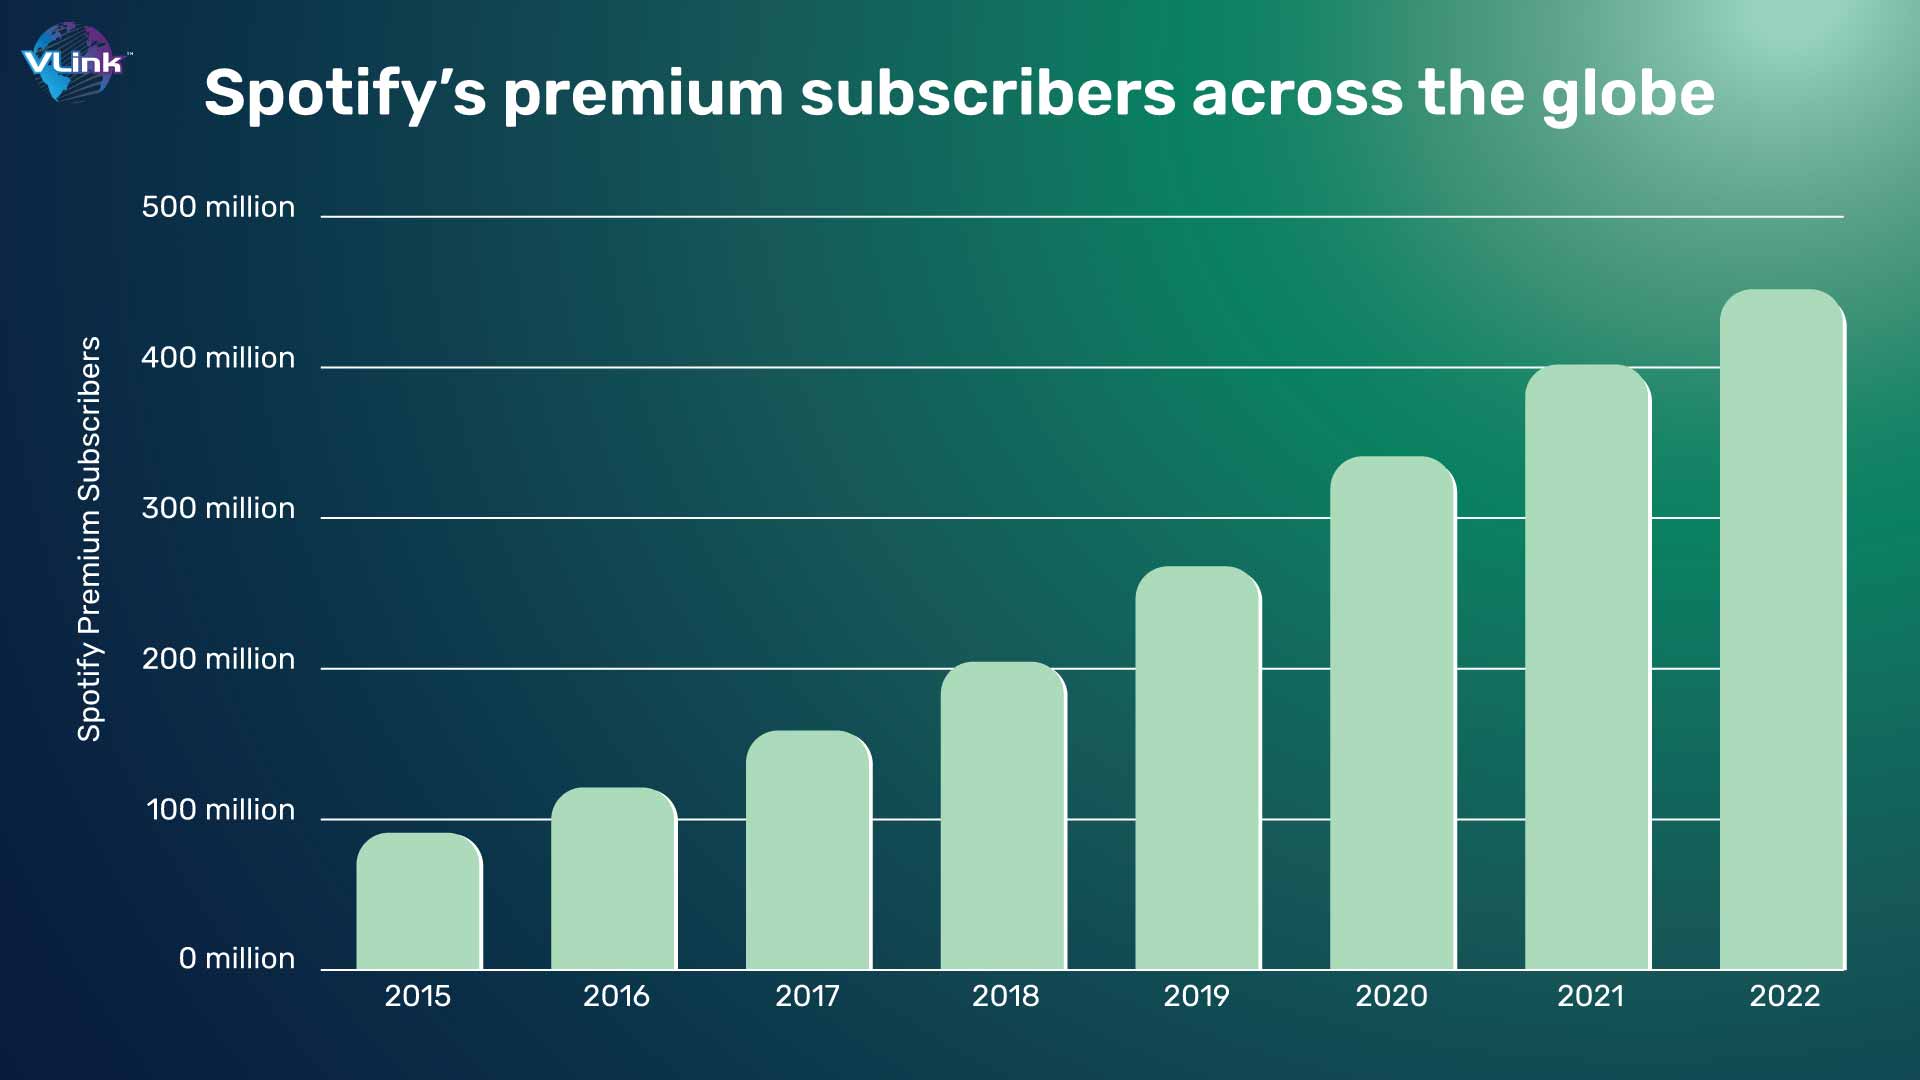 Spotify’s premium subscribers across the globe